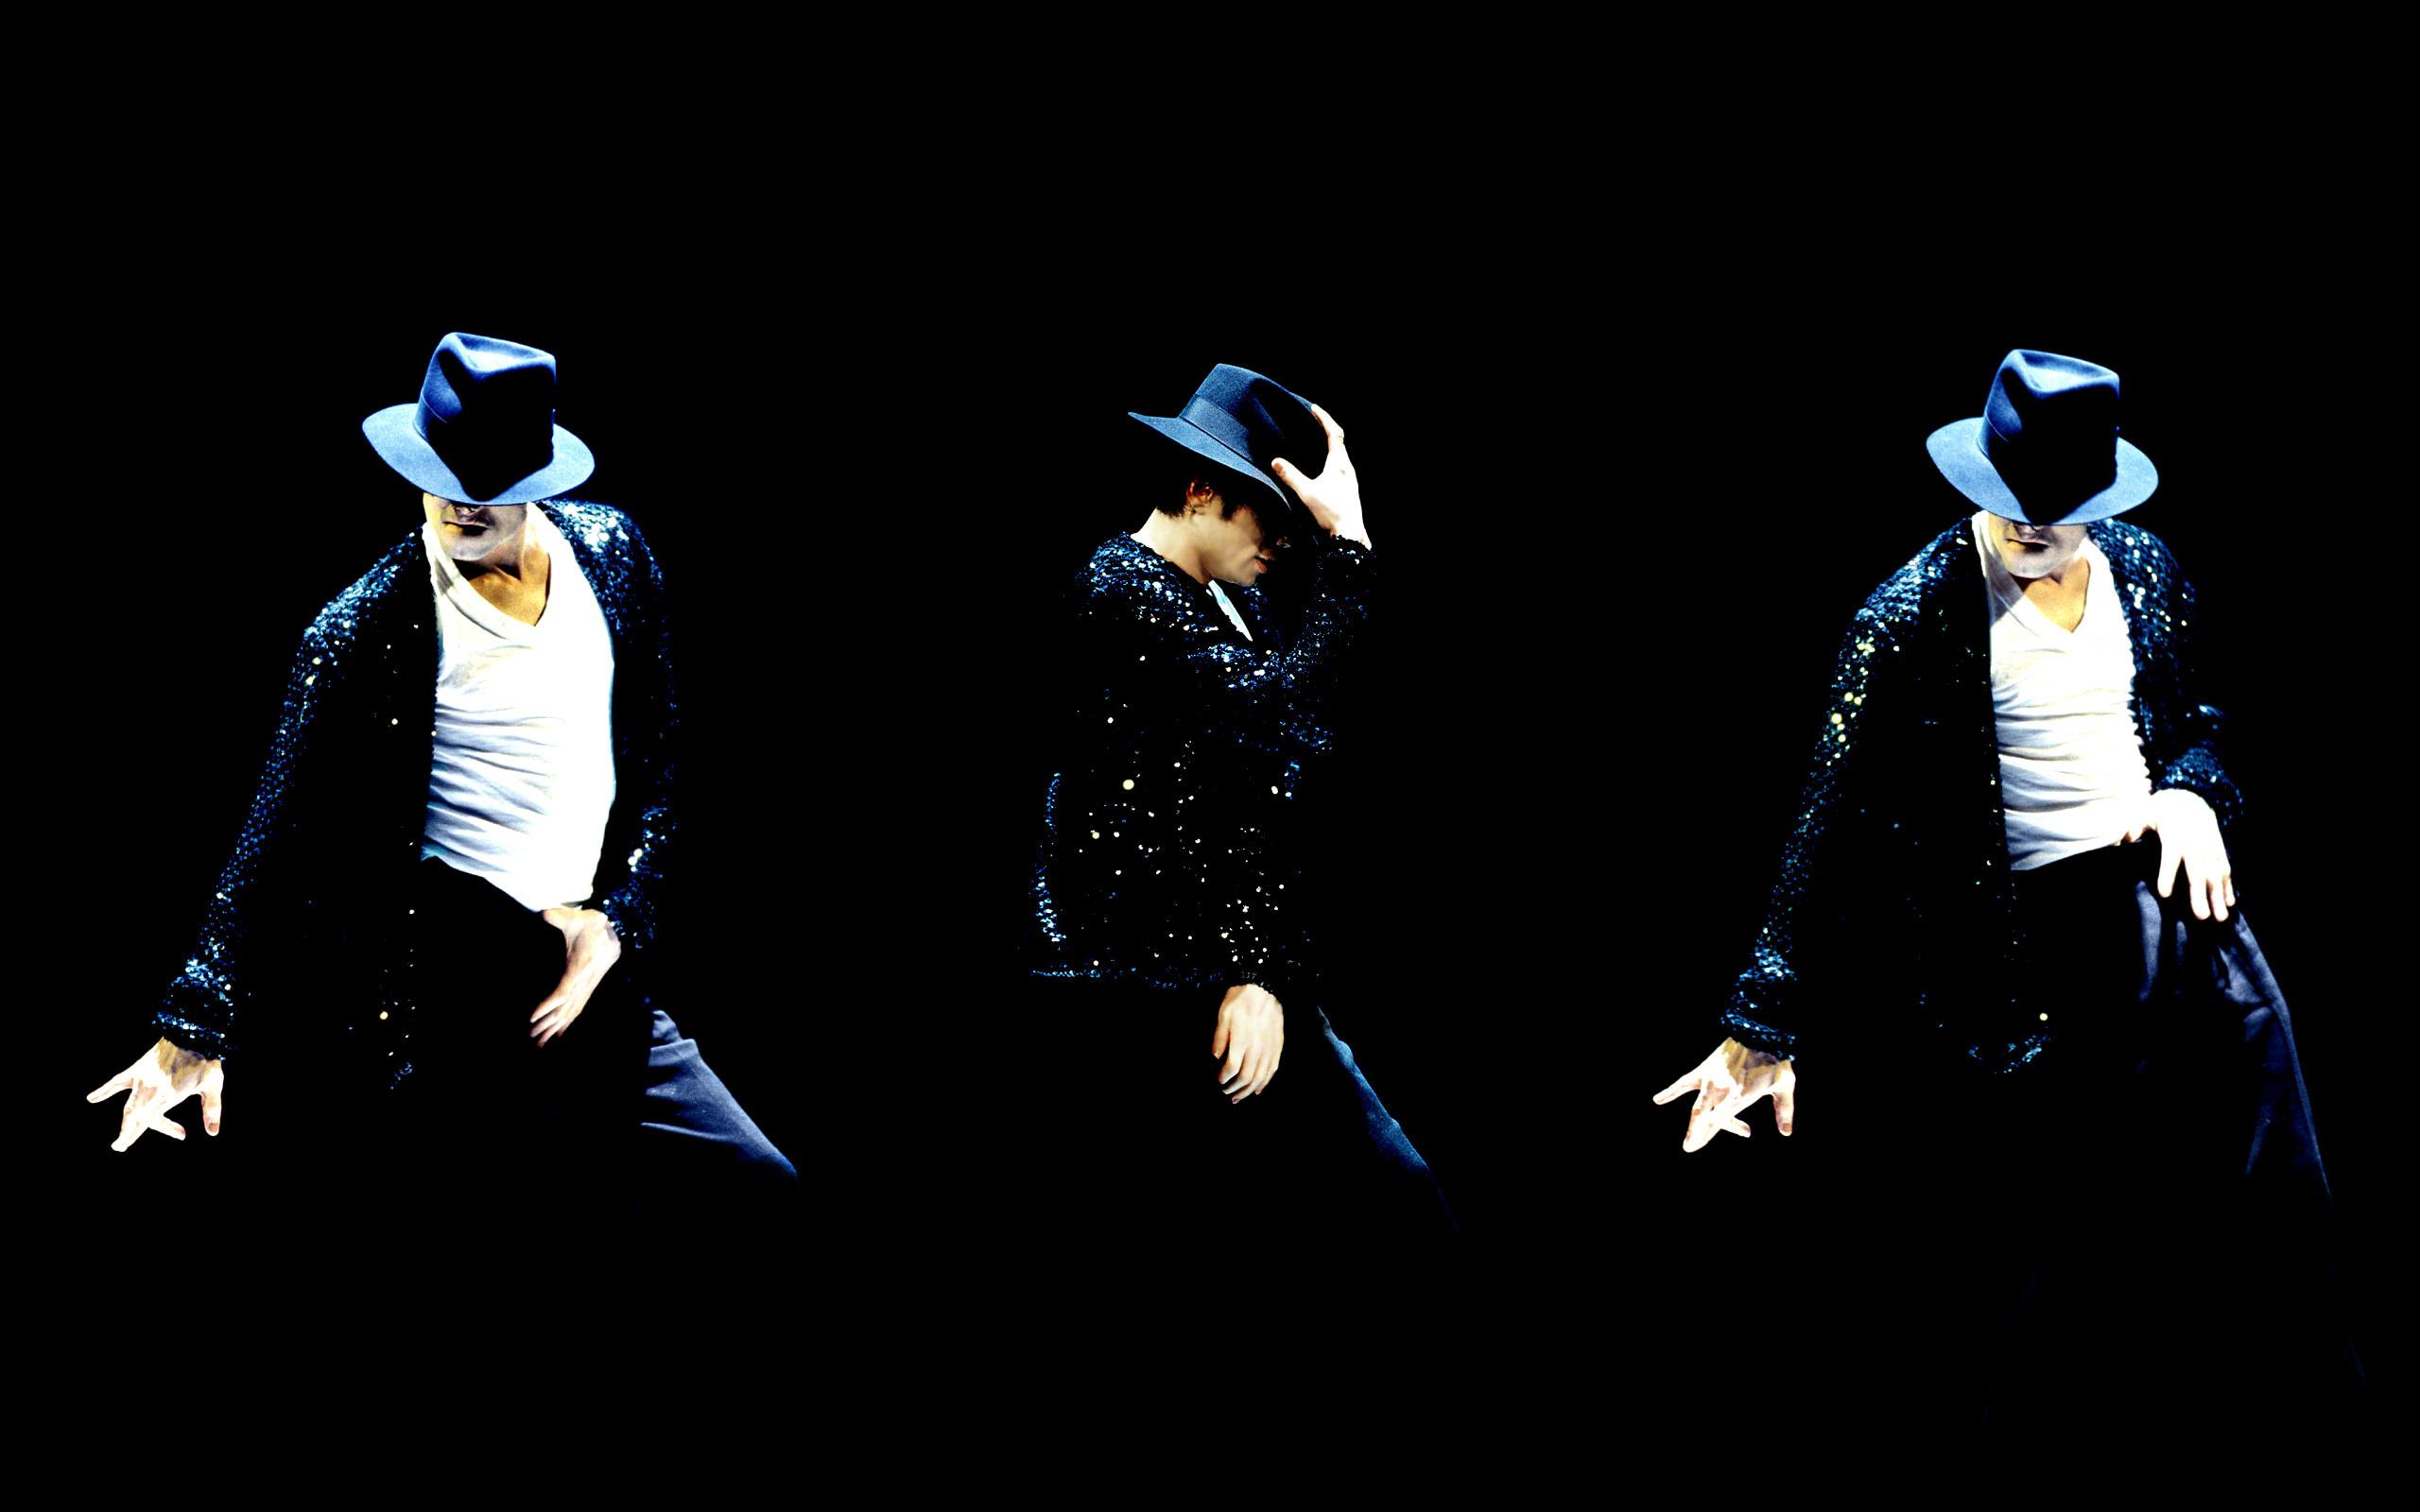 2560 x 1600 · jpeg - Billie Jean - Michael Jackson Wallpaper (35084358) - Fanpop